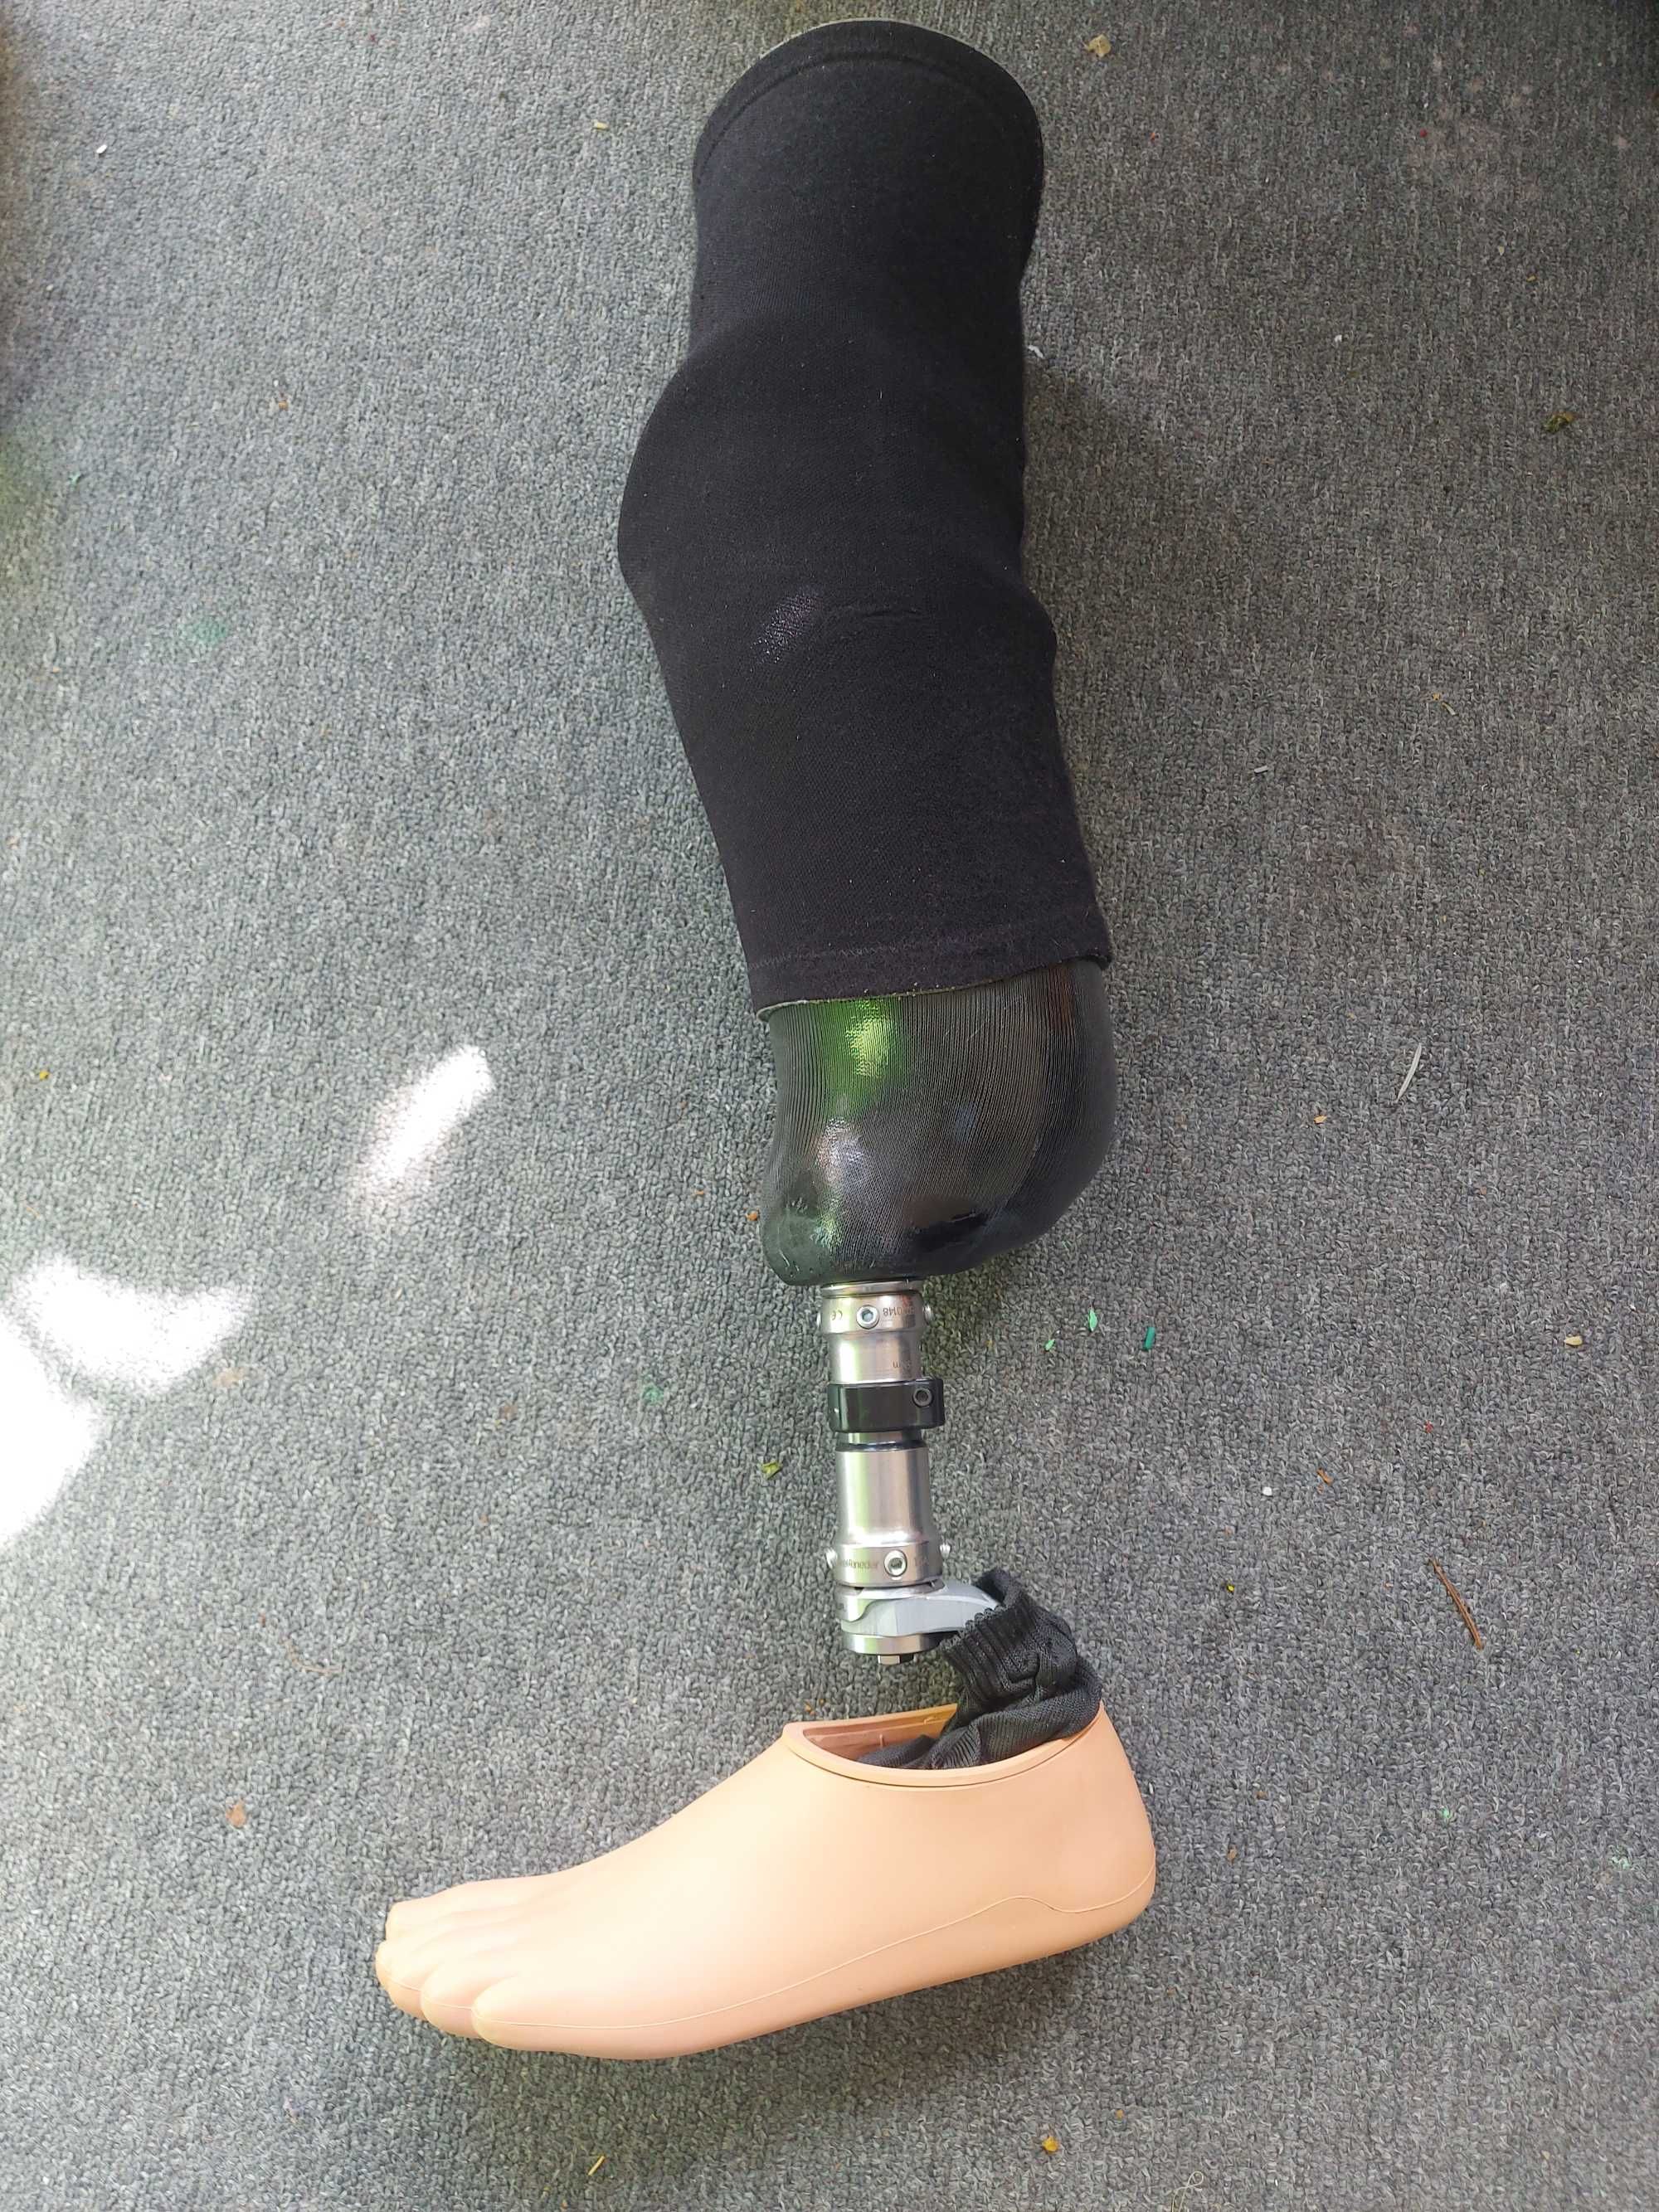 Proteza lewej nogi ossur balance foot s cat 5 size 27